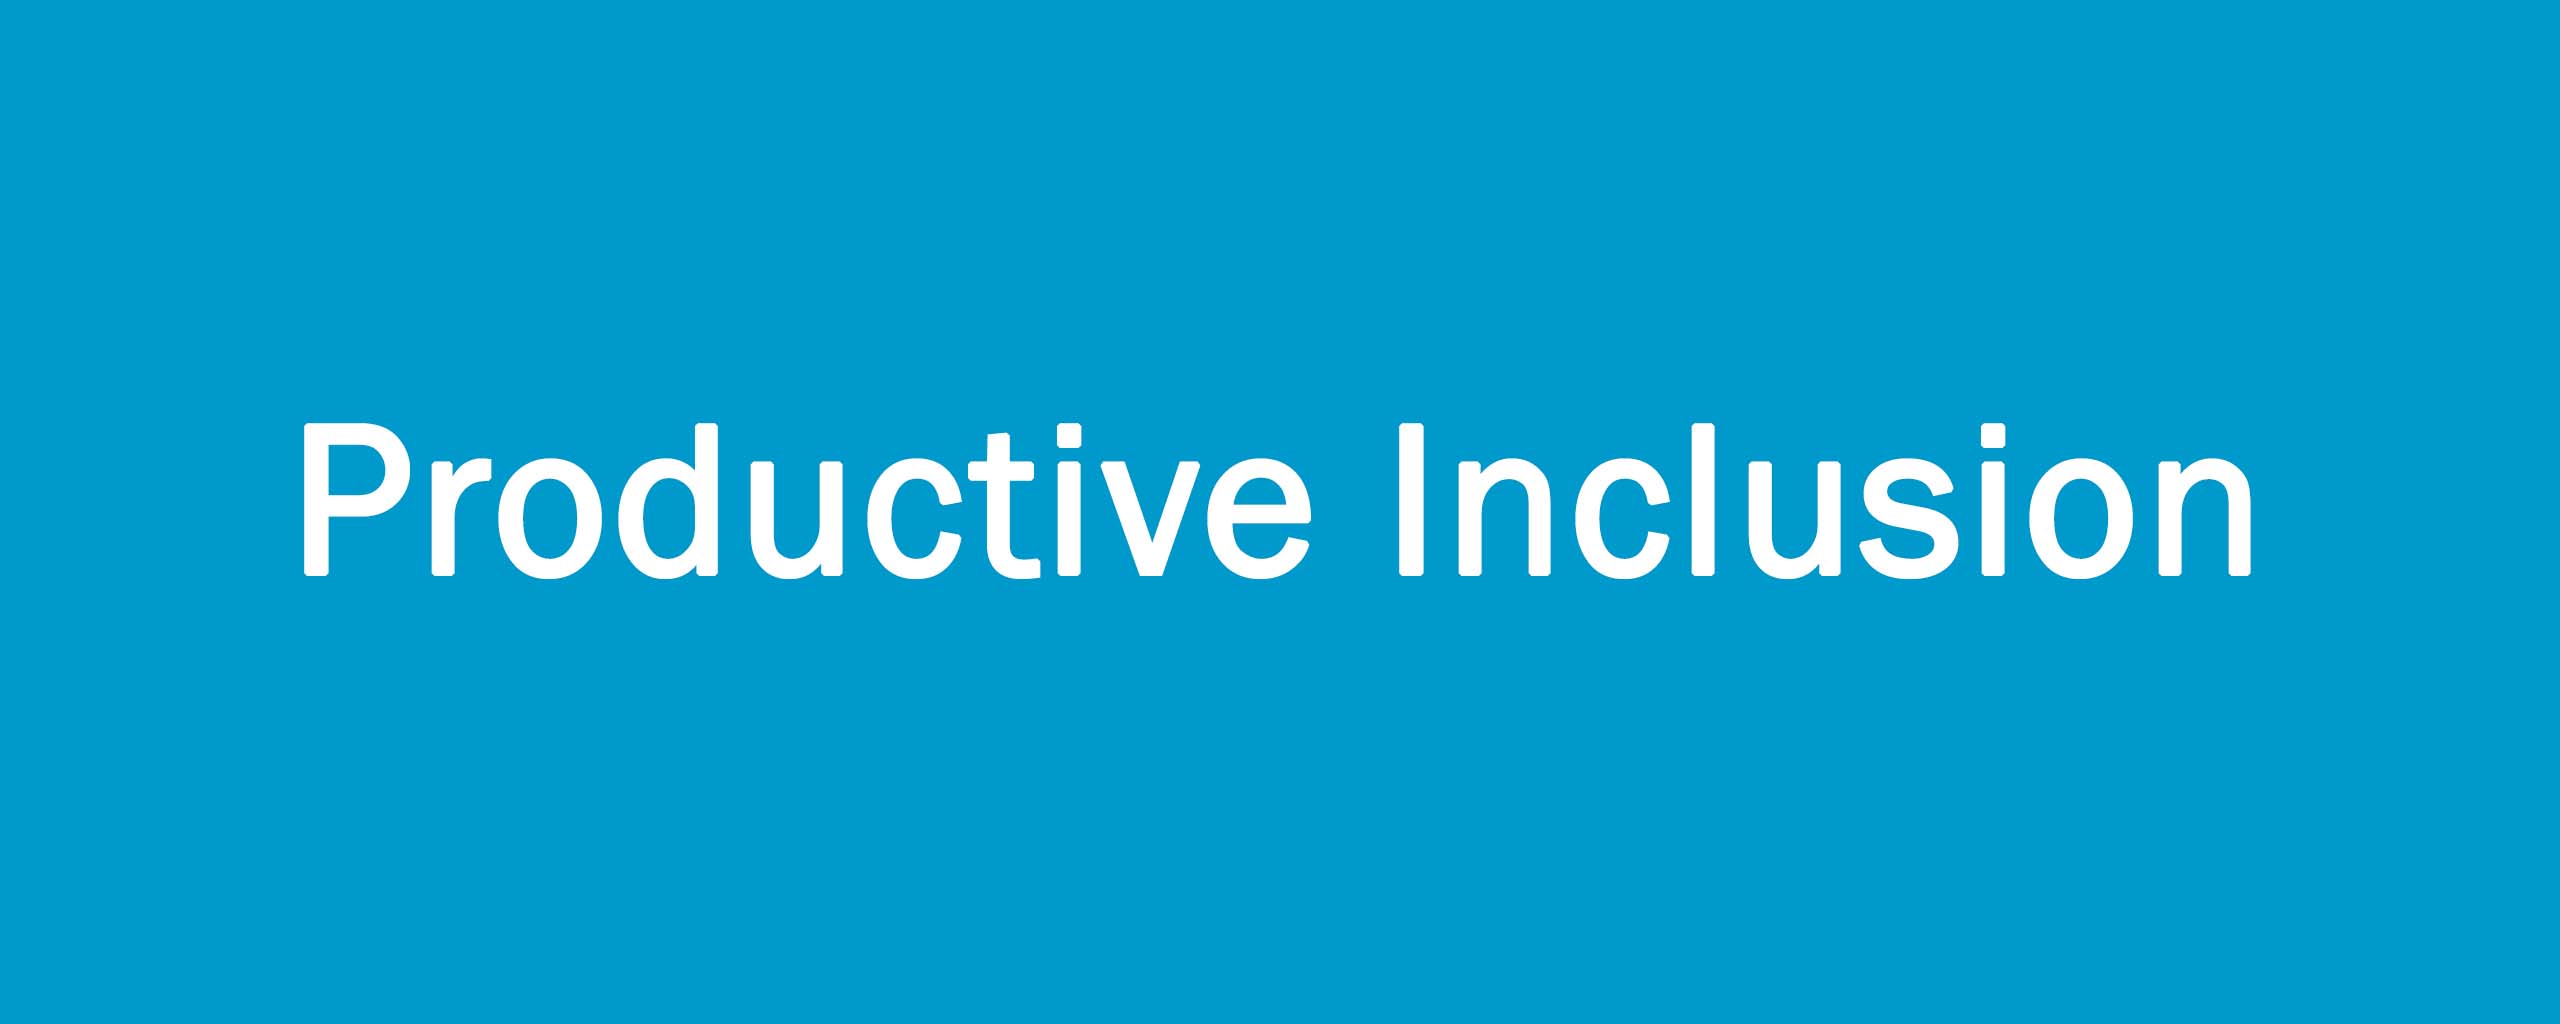 Productive Inclusion